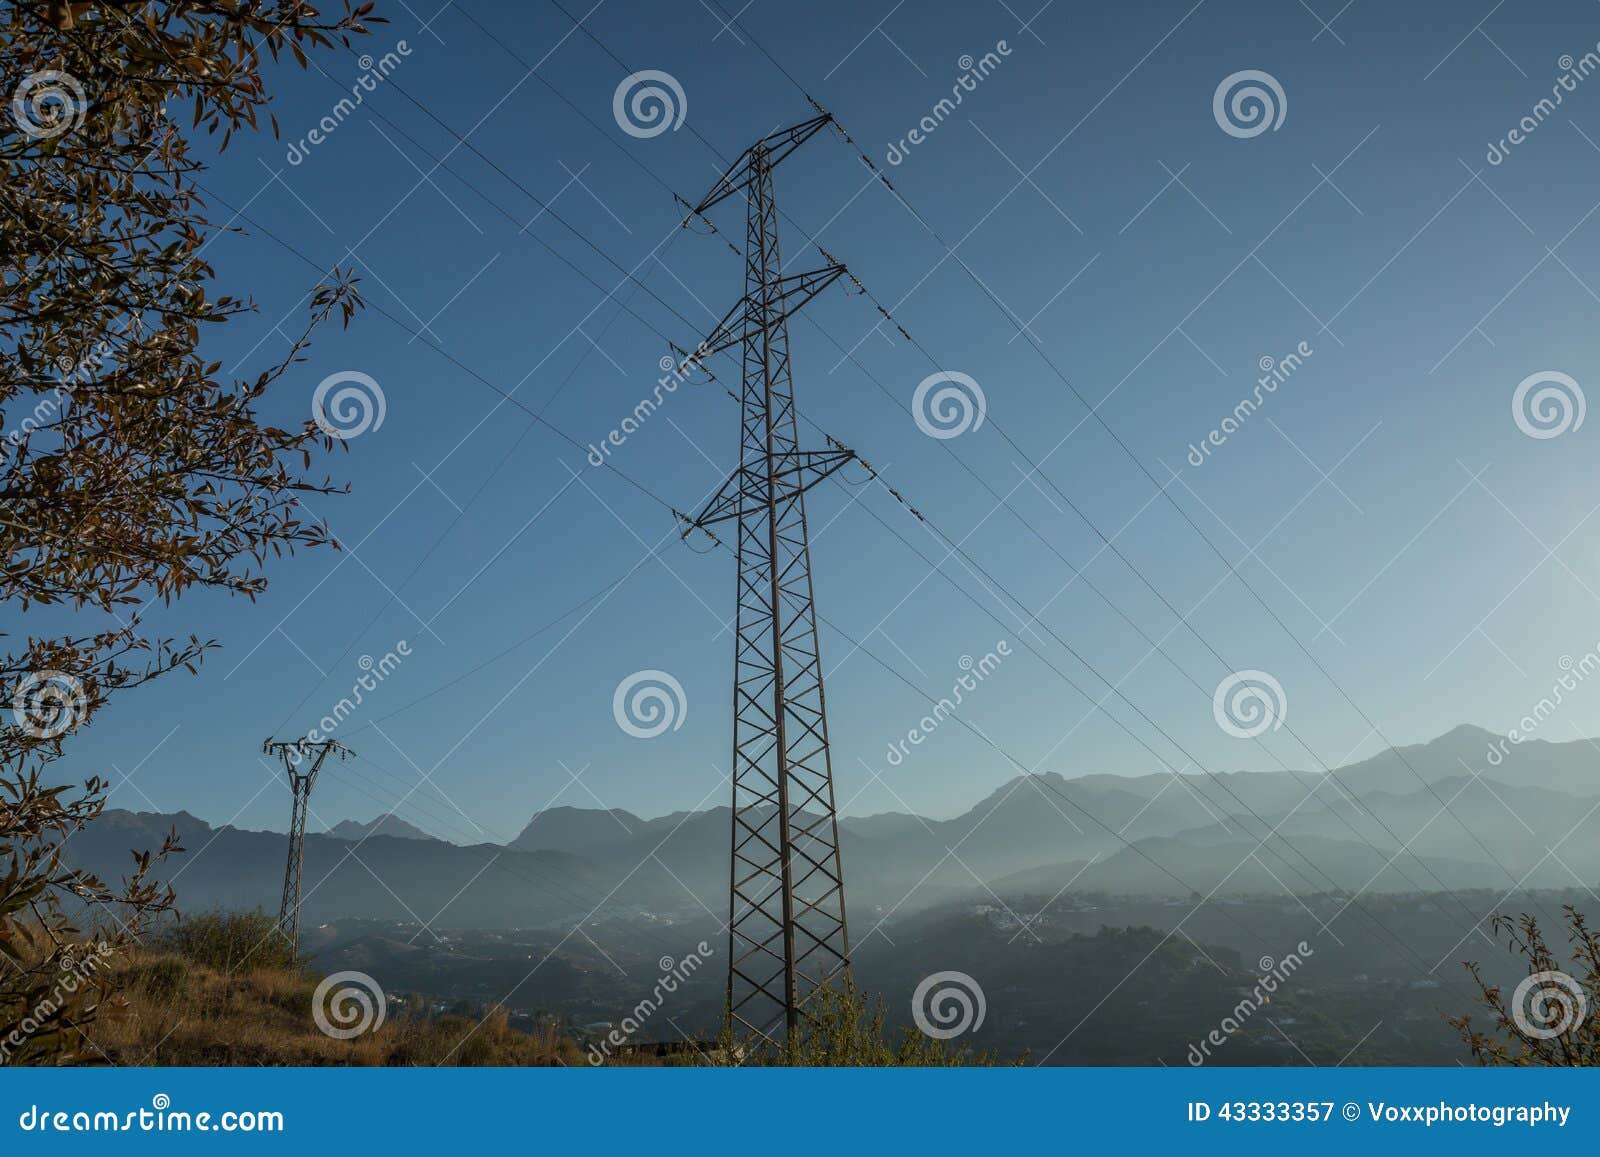 electricity pylon transmission lines